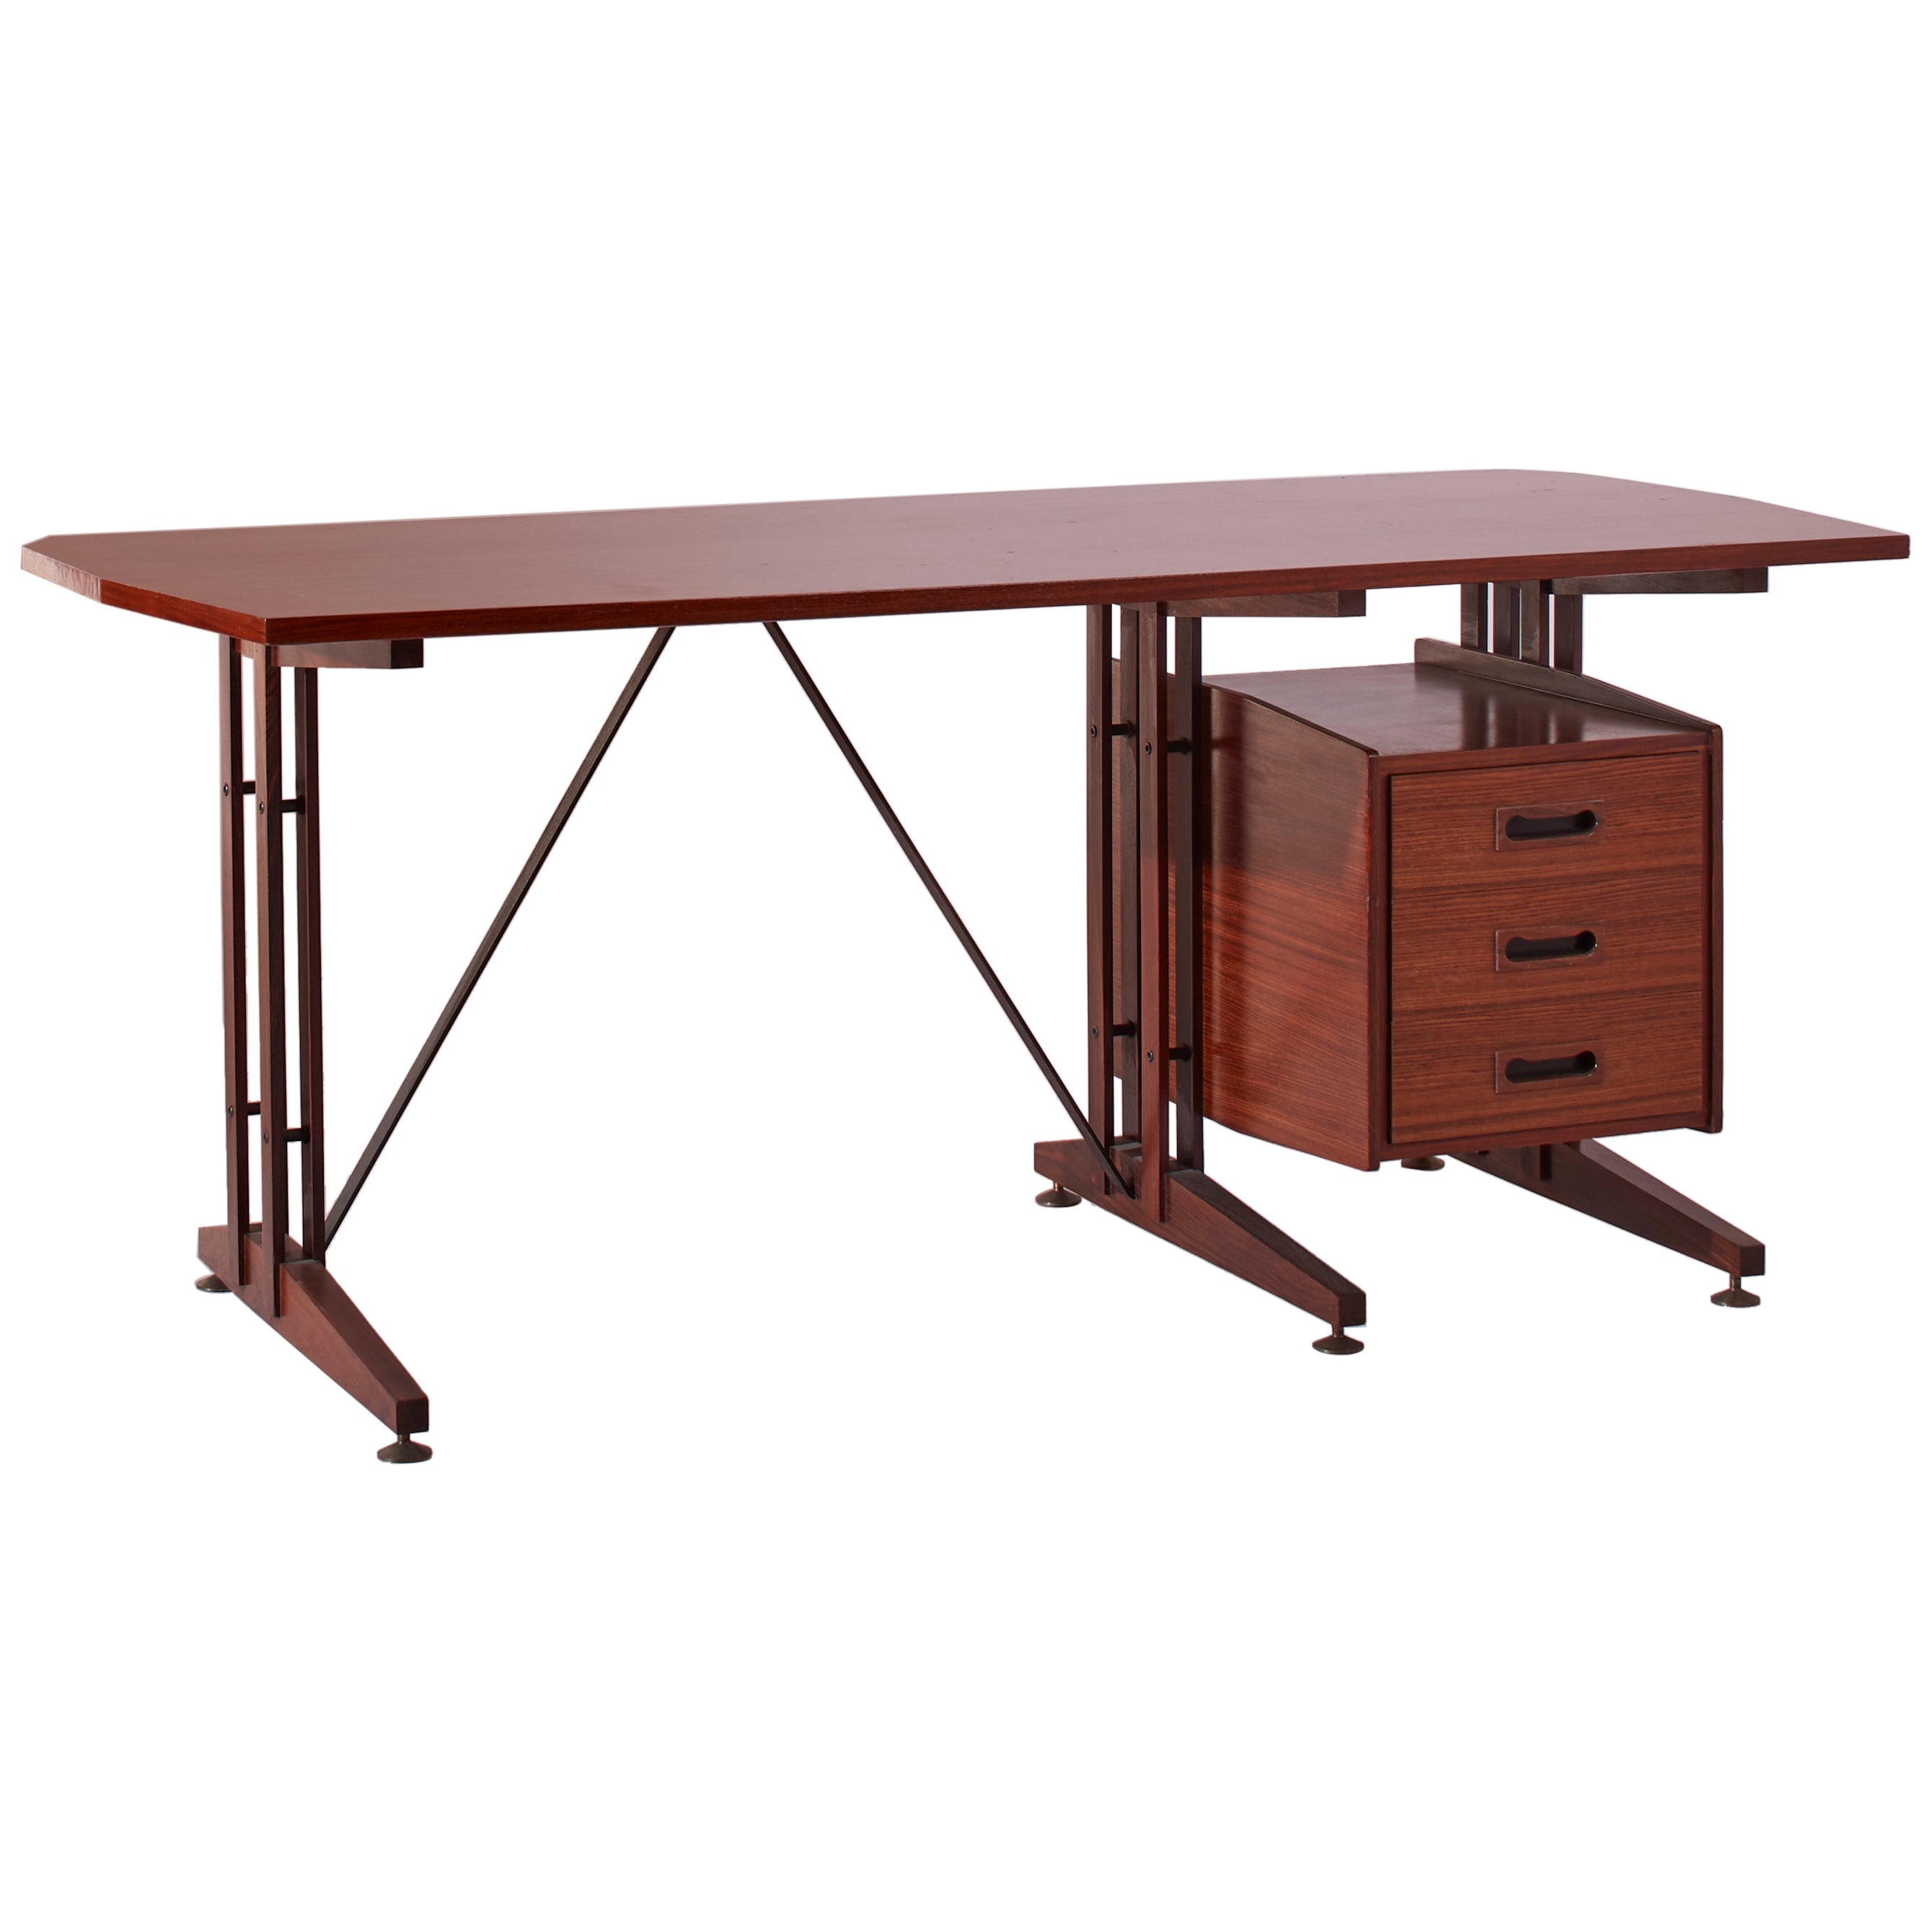 ILA (Industria Lombarda Arredamenti) teak and metal desk model Ss34, Italy, 1959 For Sale